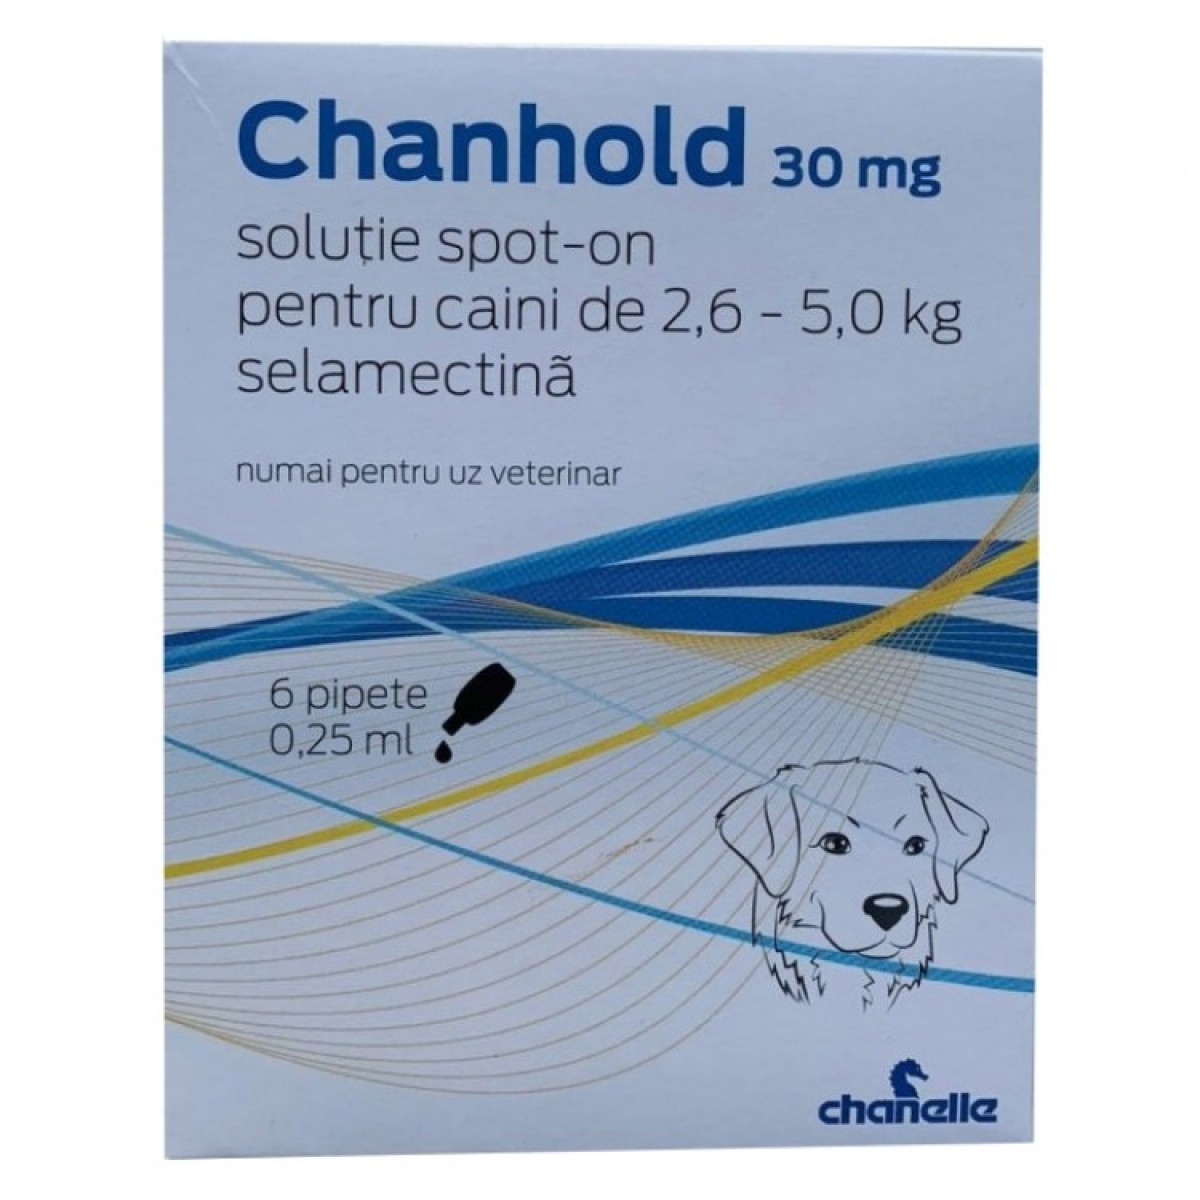 Chanhold 30 mg pentru câini între 2,6 - 5 kg 6 pipete antiparazitare, Antiparazitare externe, Antiparazitare, Câini 